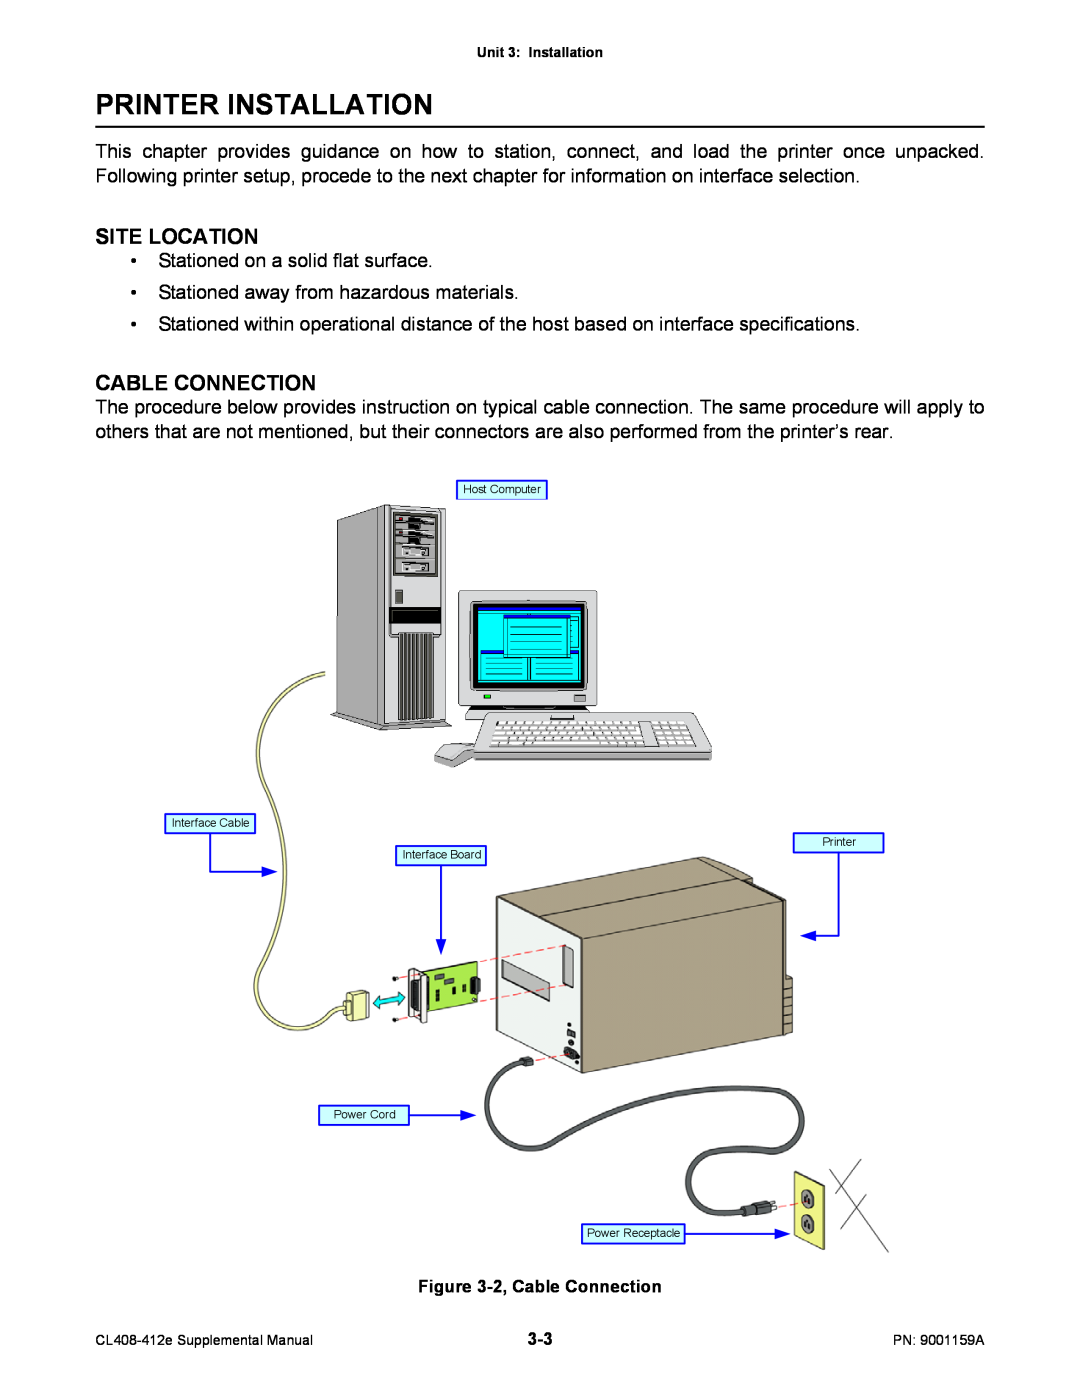 SATO CL408-412e manual Printer Installation, Site Location, Cable Connection 